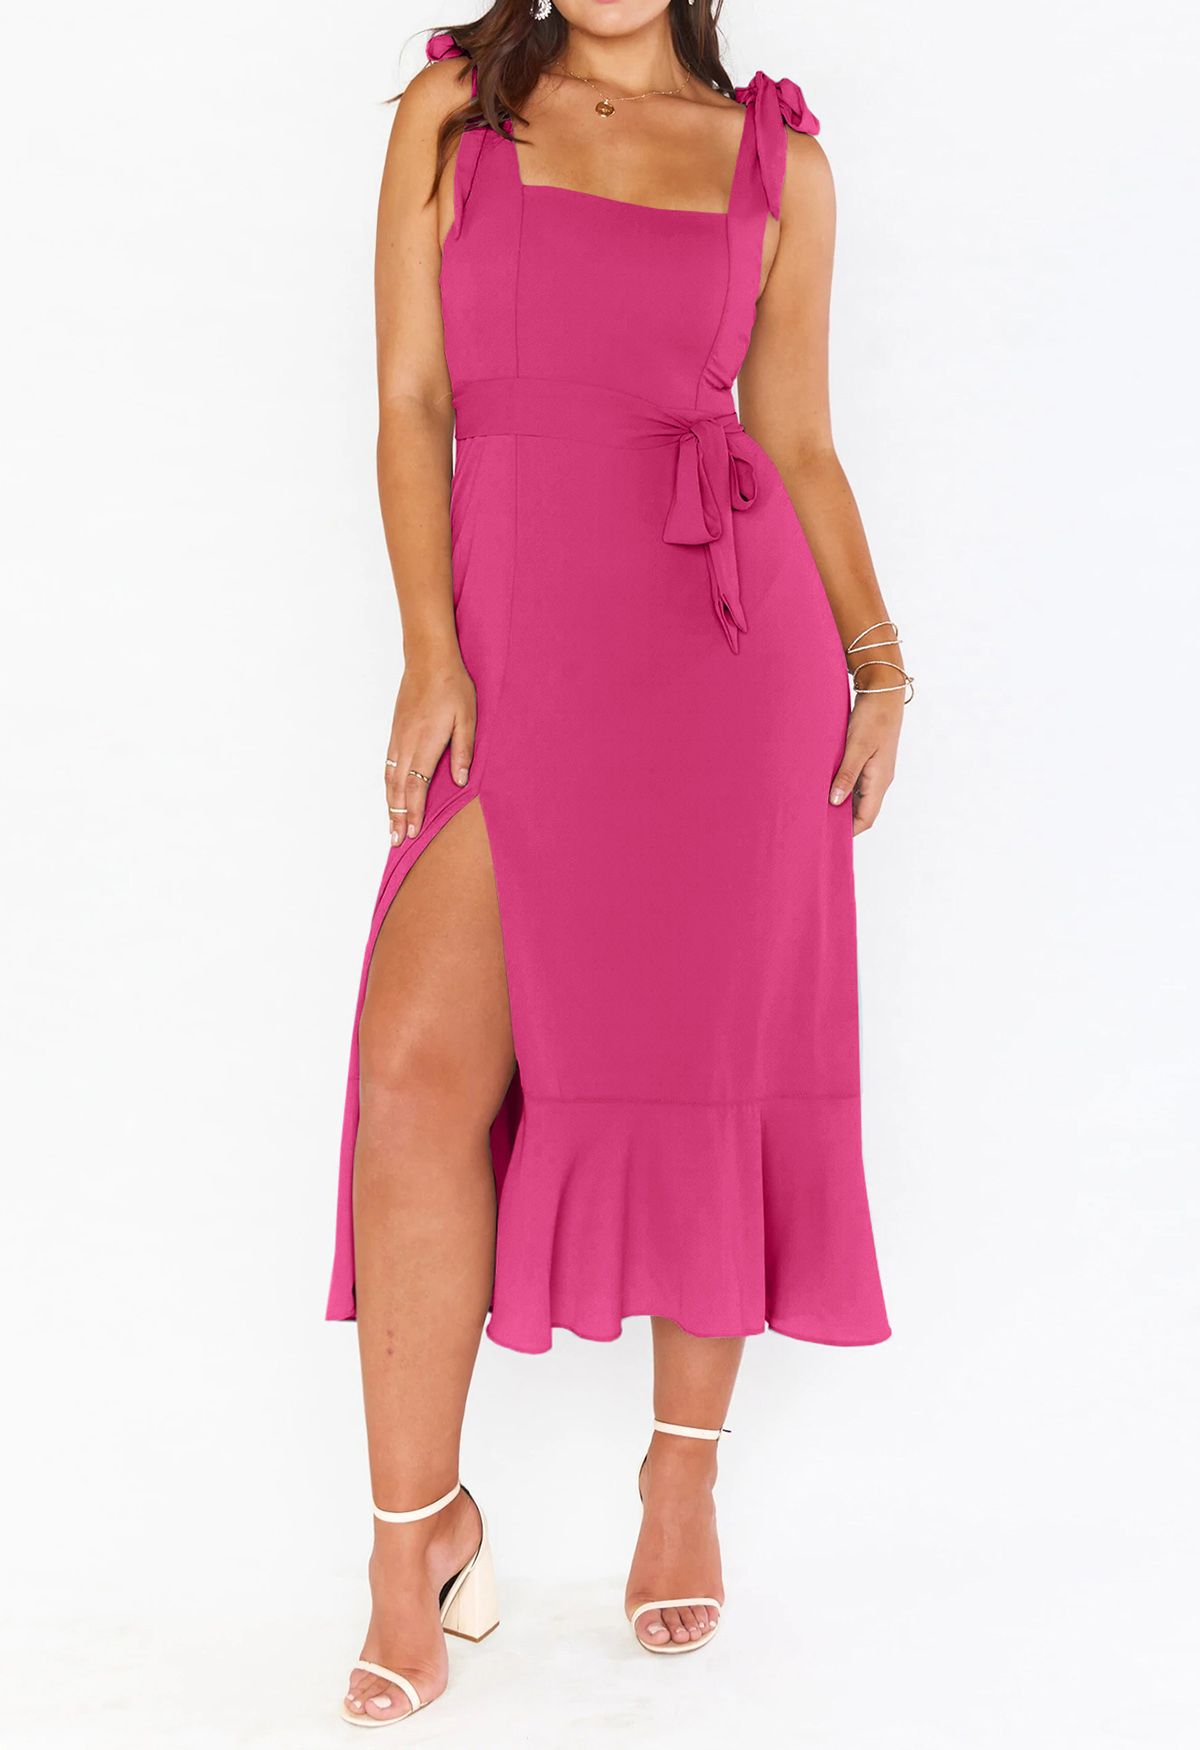 Ruffle Hem Tie-Shoulder Cami Dress in Hot Pink